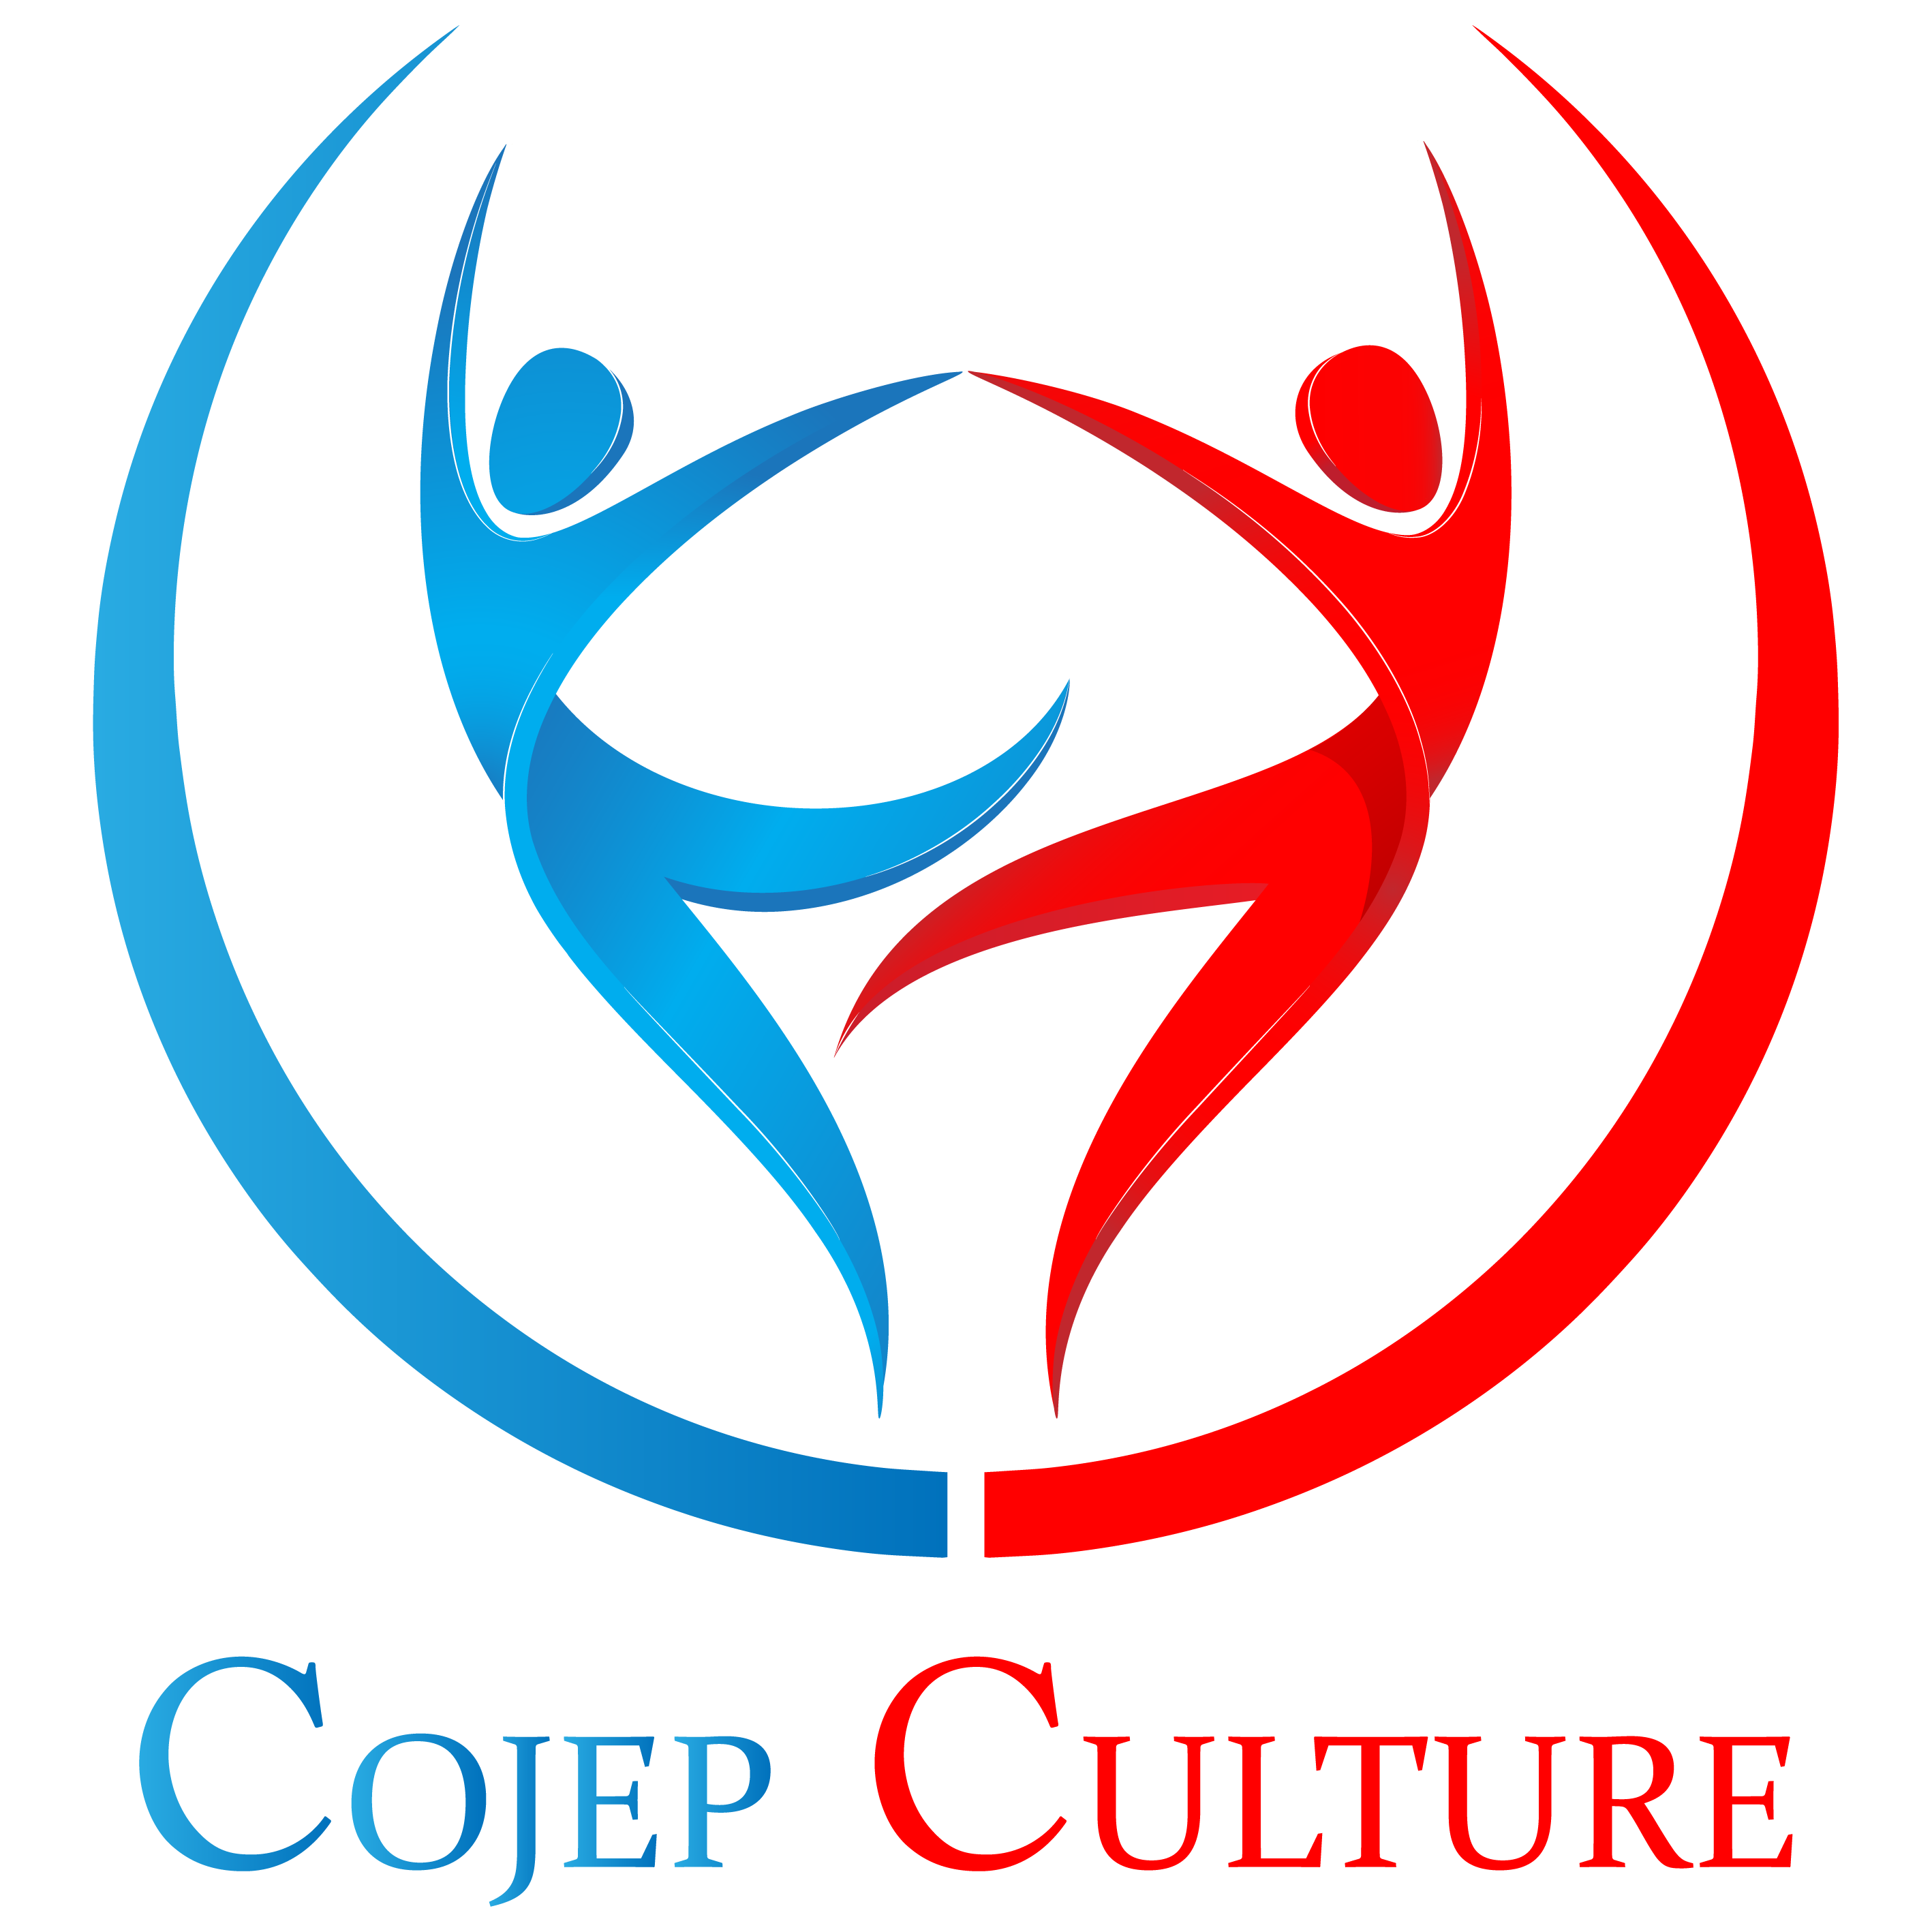 Cojep Culture